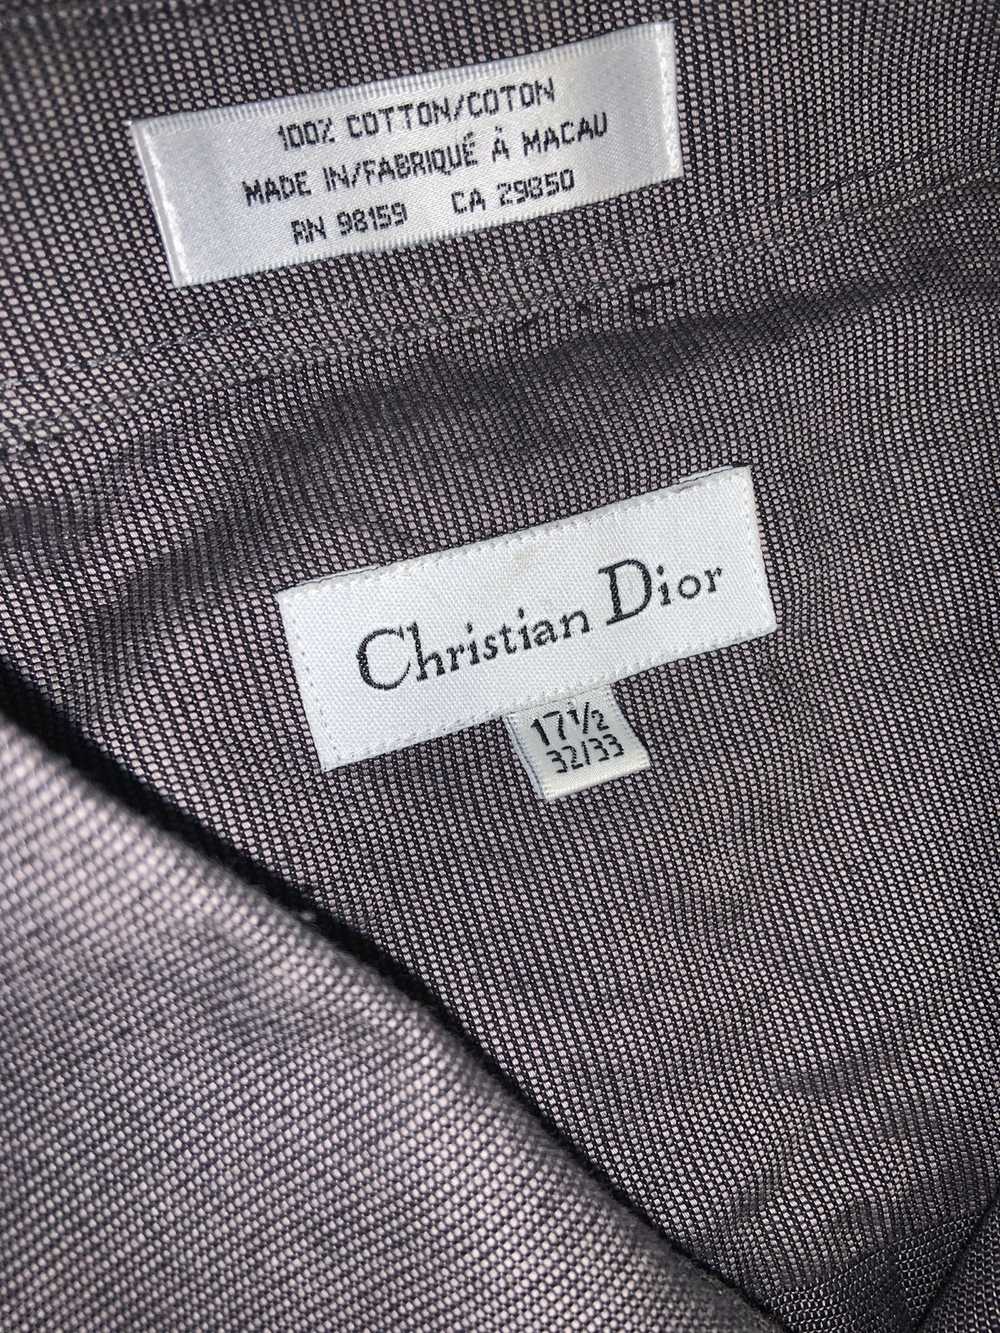 Dior Christian Dior dark grey shirt - image 2